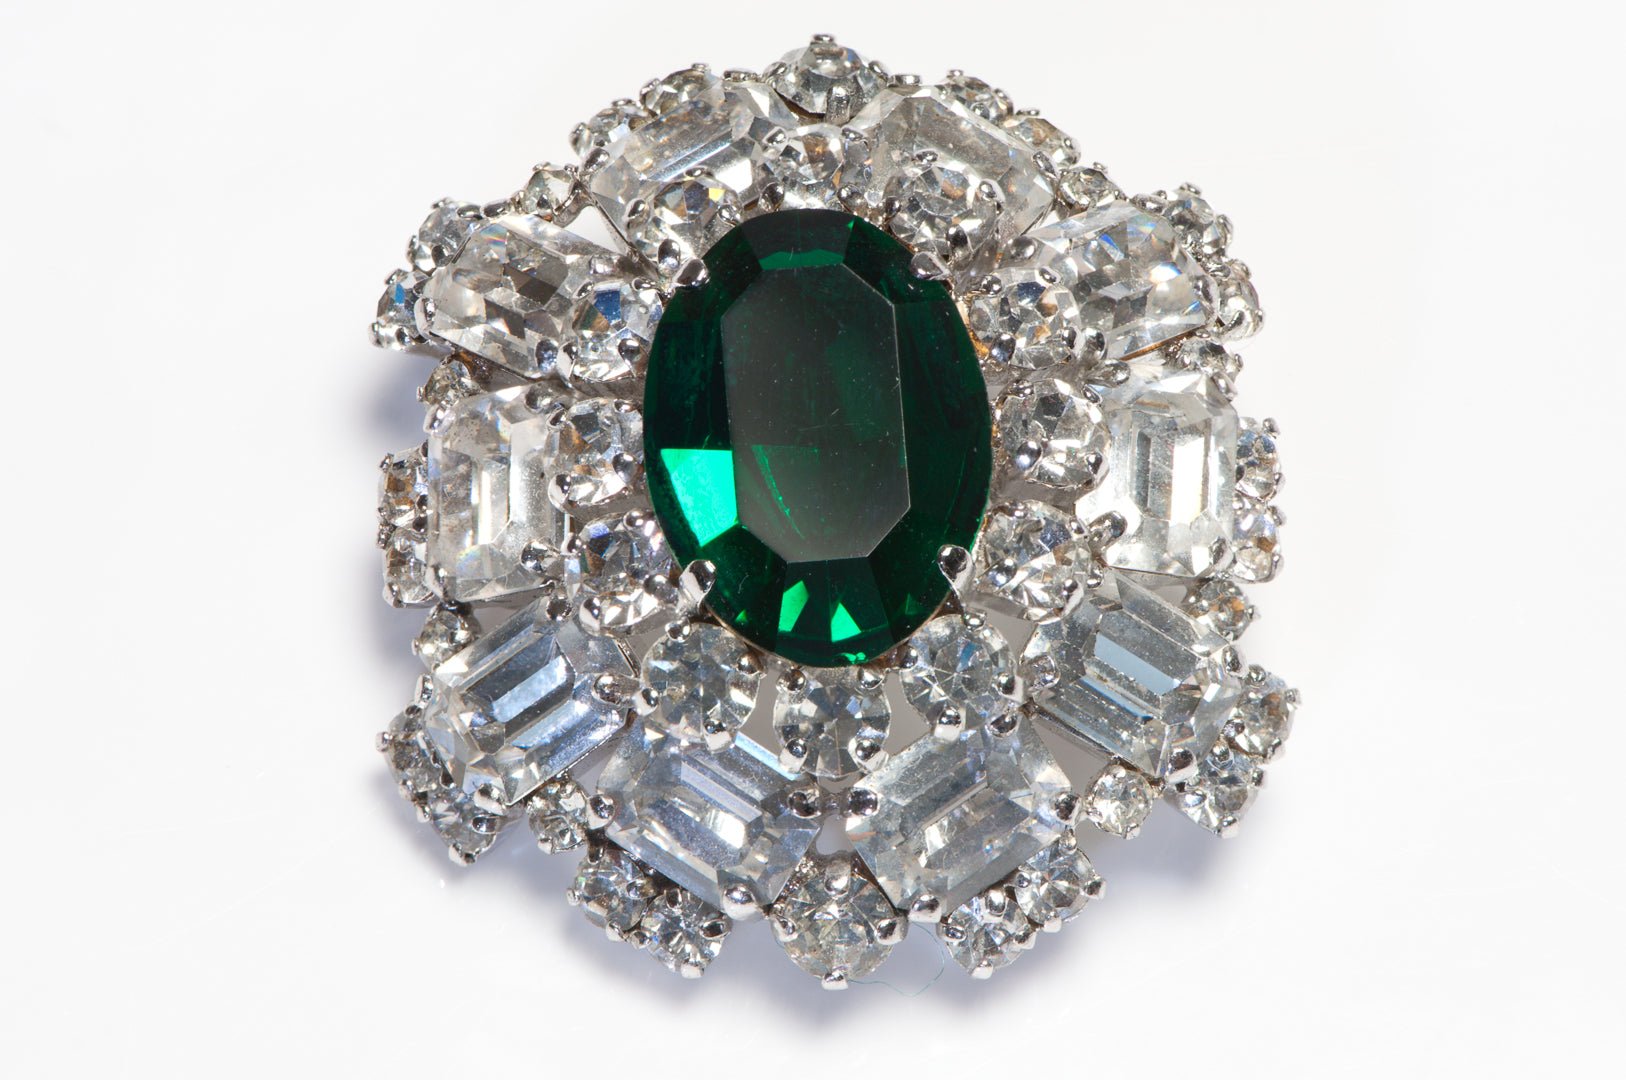 Christian Dior Paris 1967 Henkel & Grosse Germany Green Crystal Brooch - DSF Antique Jewelry